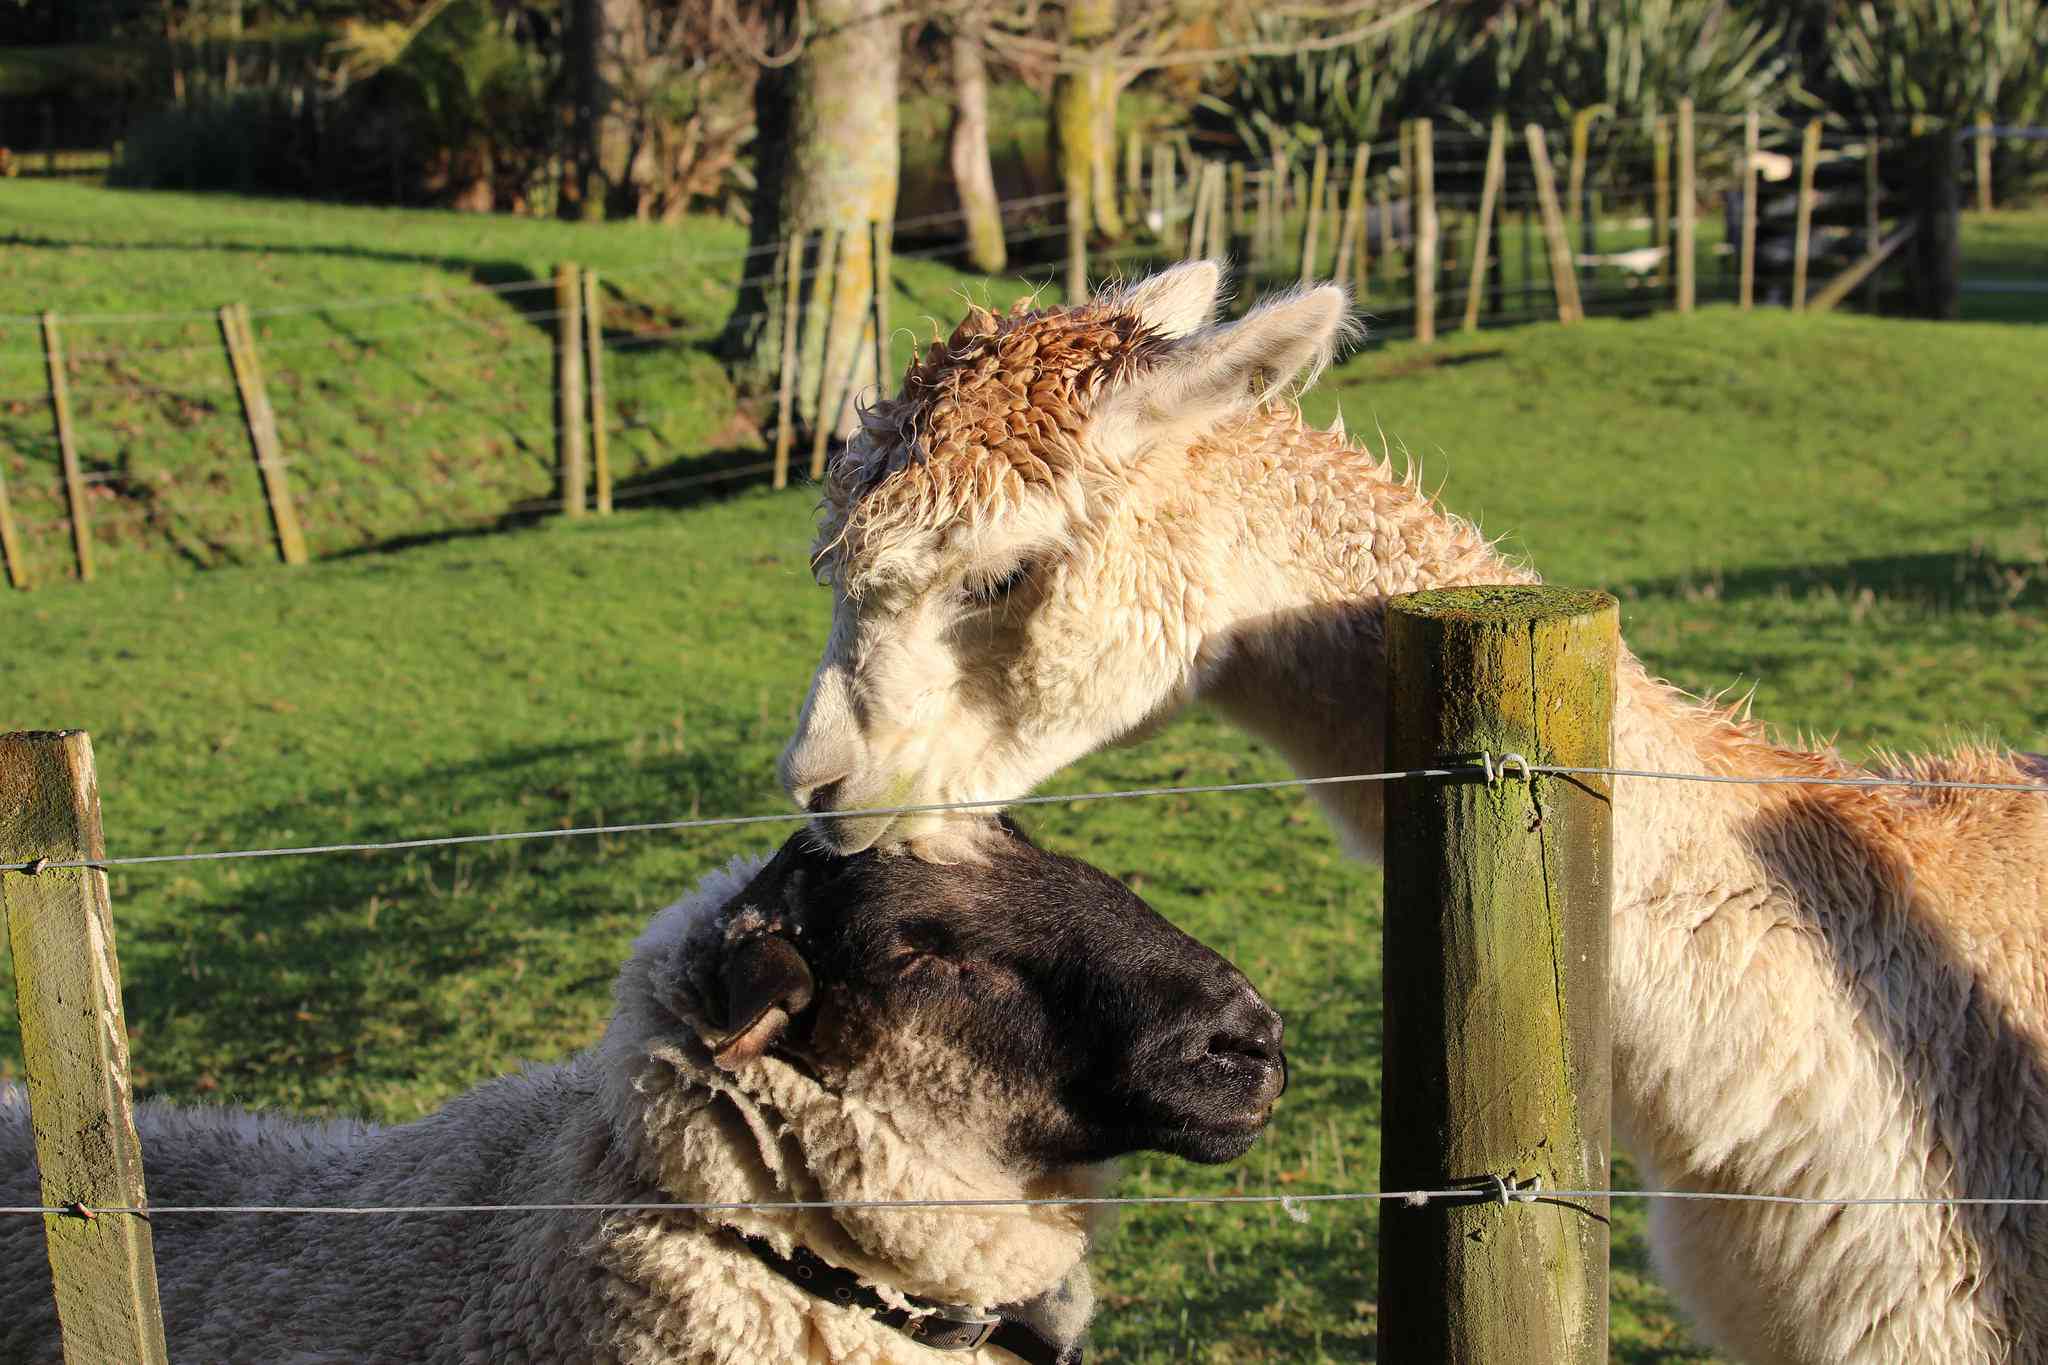 A llama nuzzles its sheep friend.